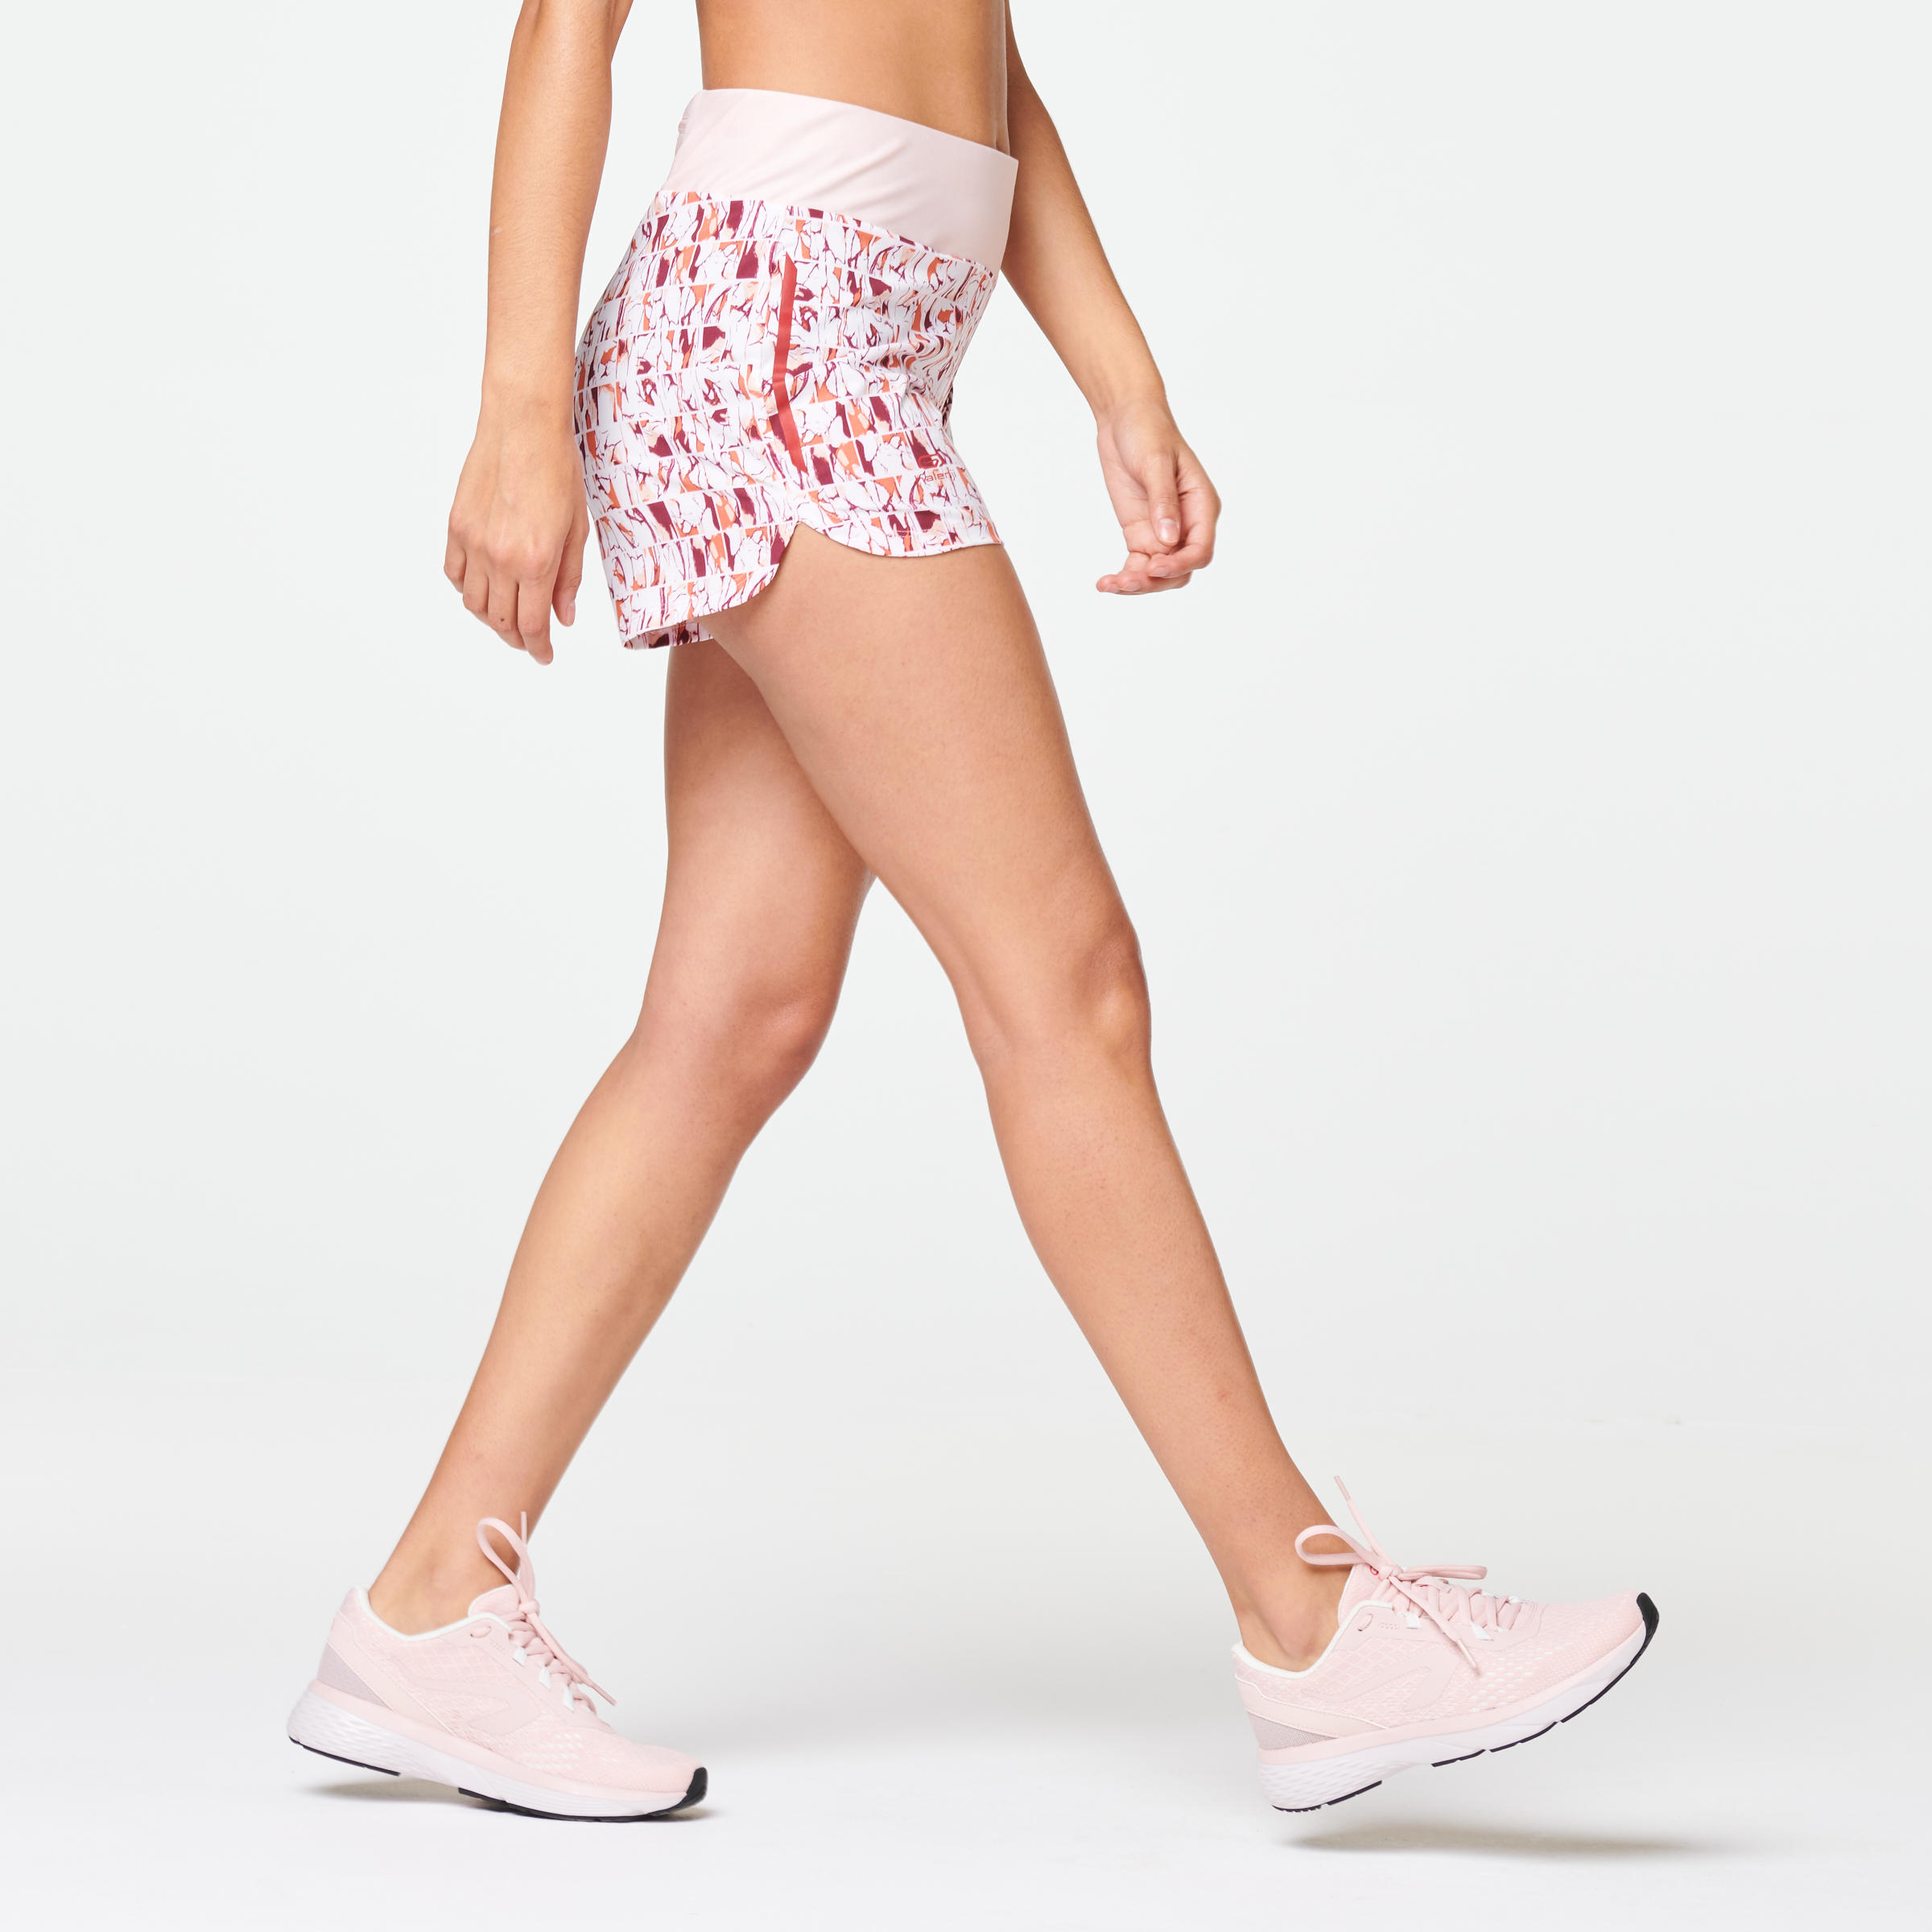 Dry women's running shorts - pink print 3/8